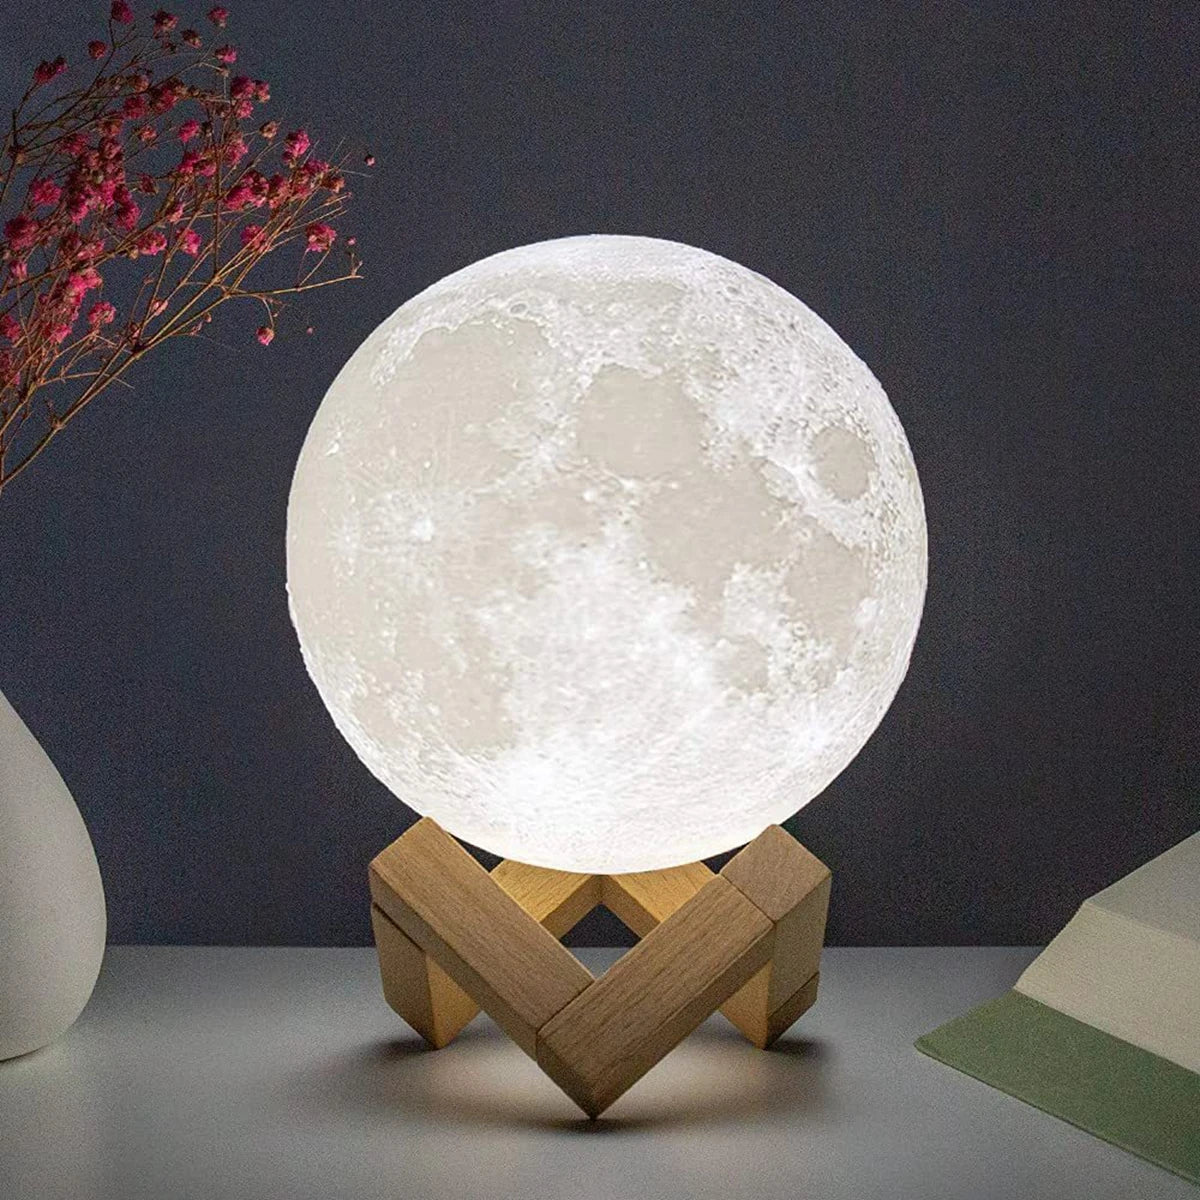 Moon Lamp LED Light | 8cm Moon Glow Night Light - VarietyGifts